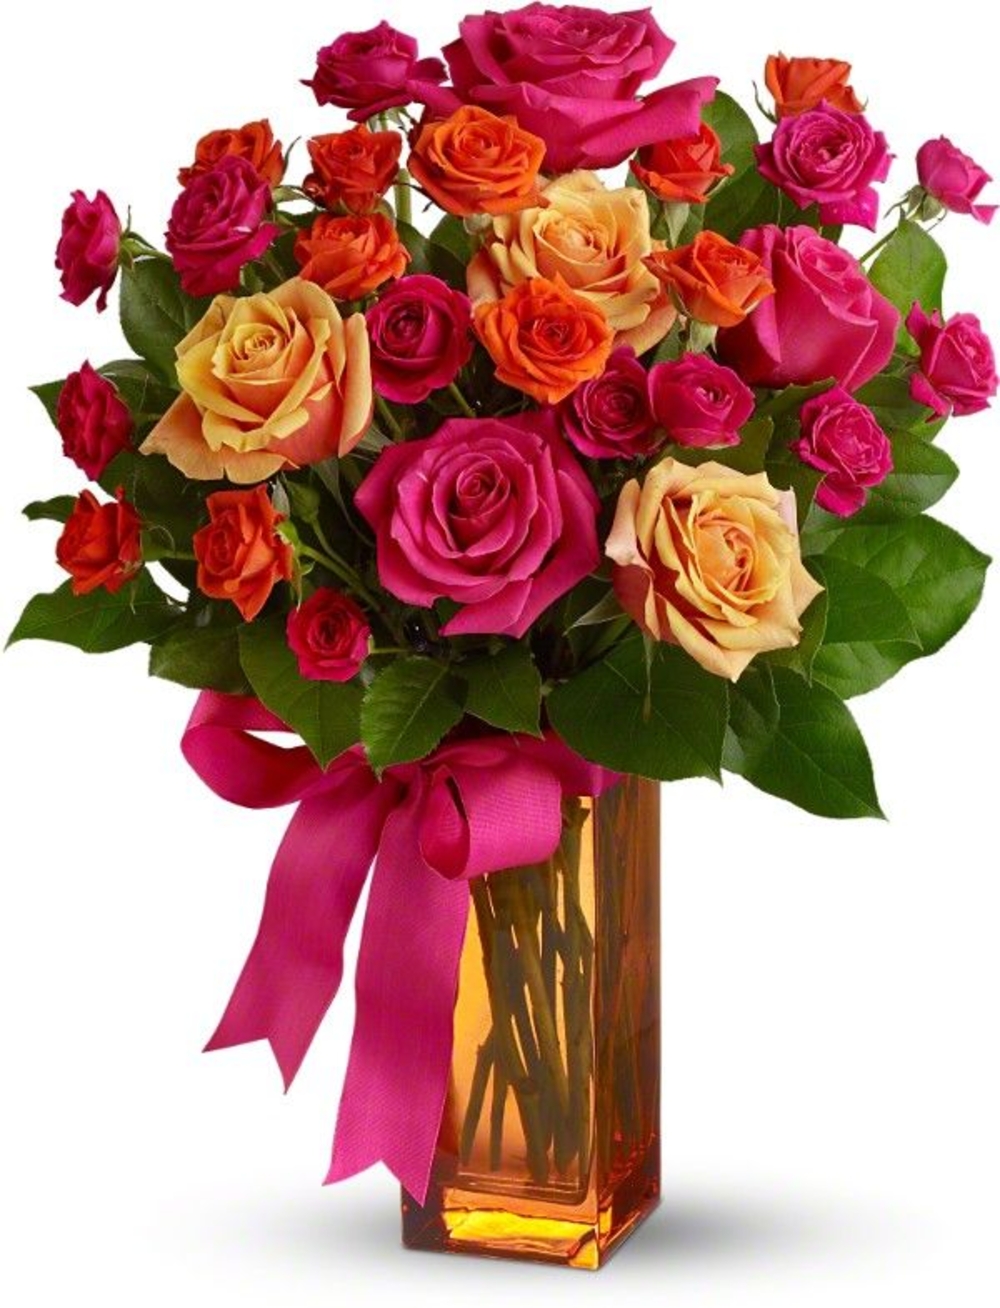 Beautiful Mixed Rose Flower Vase